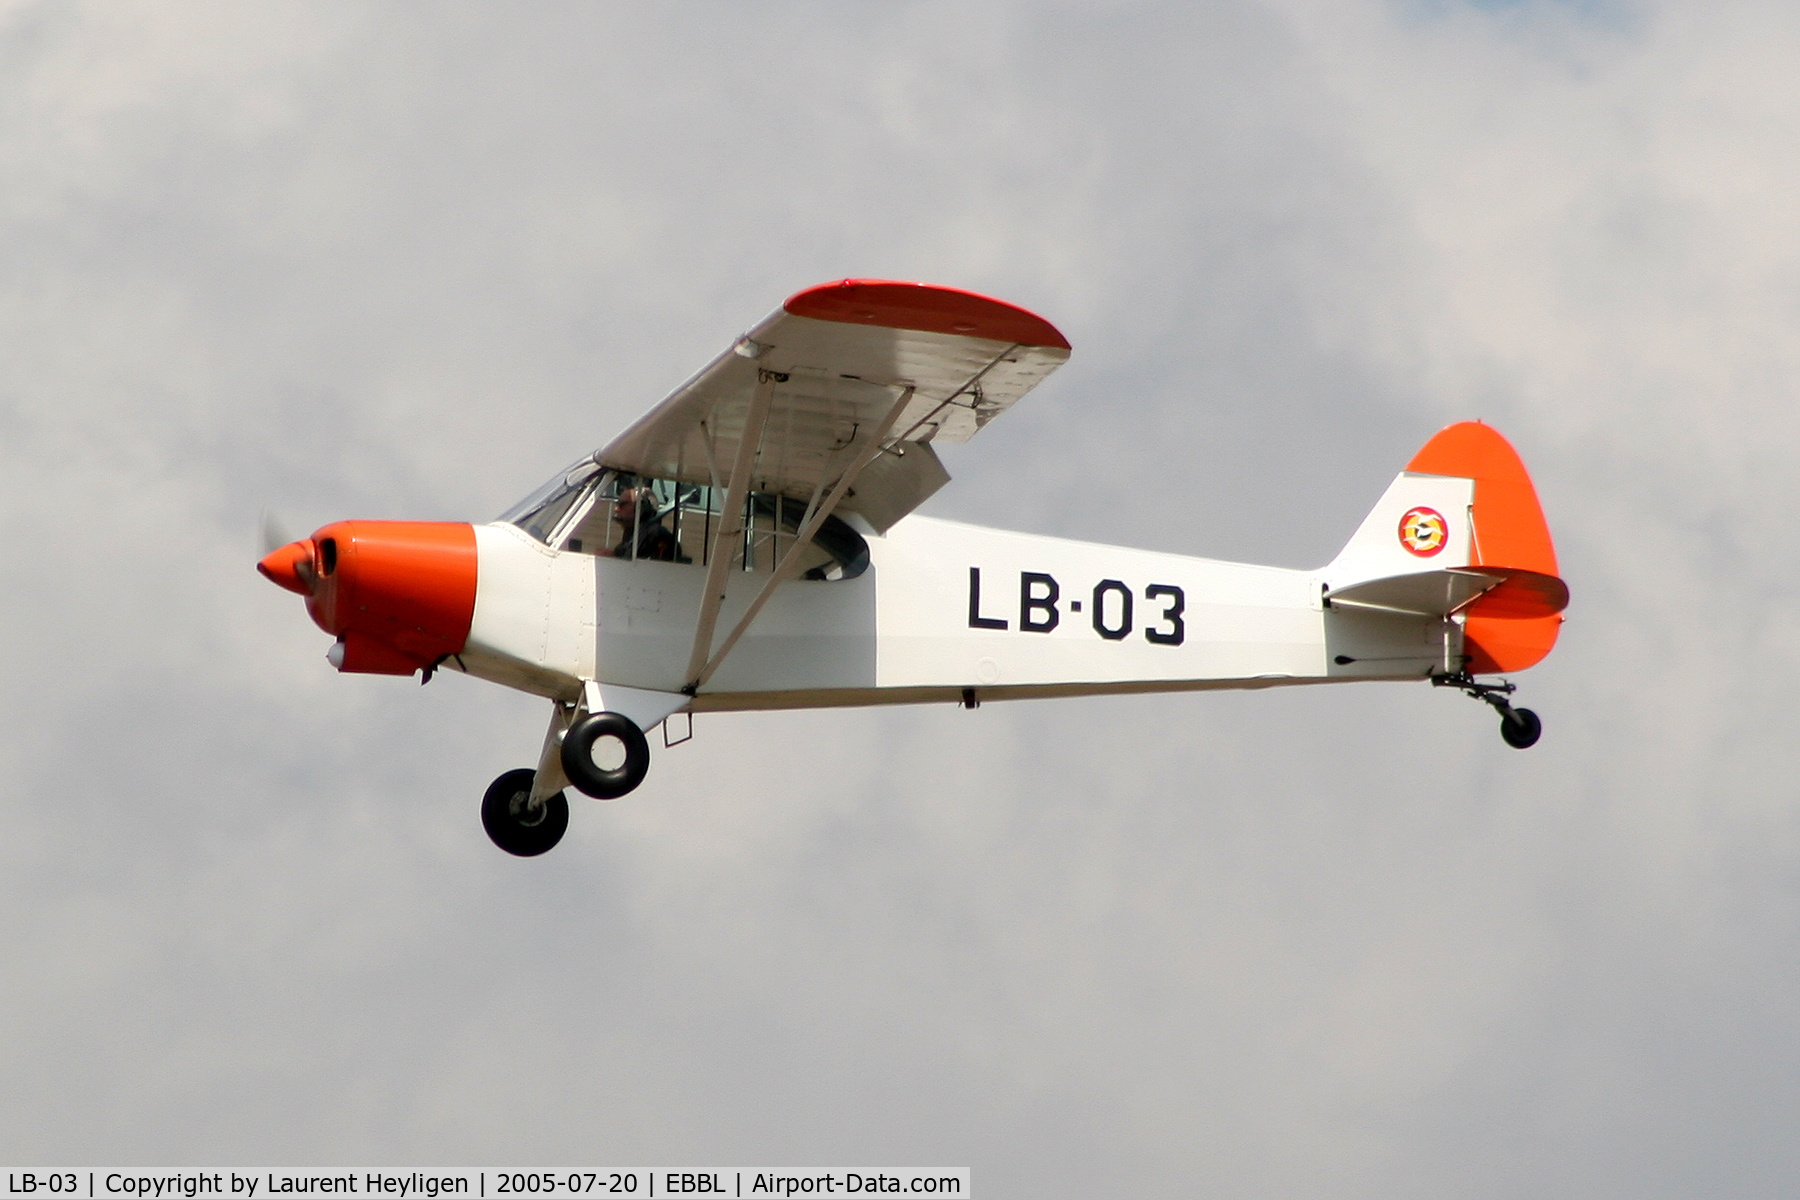 LB-03, 1954 Piper L-21B Super Cub (PA-18-135) C/N 18-3842, Landing at Kleine Brogel airbase